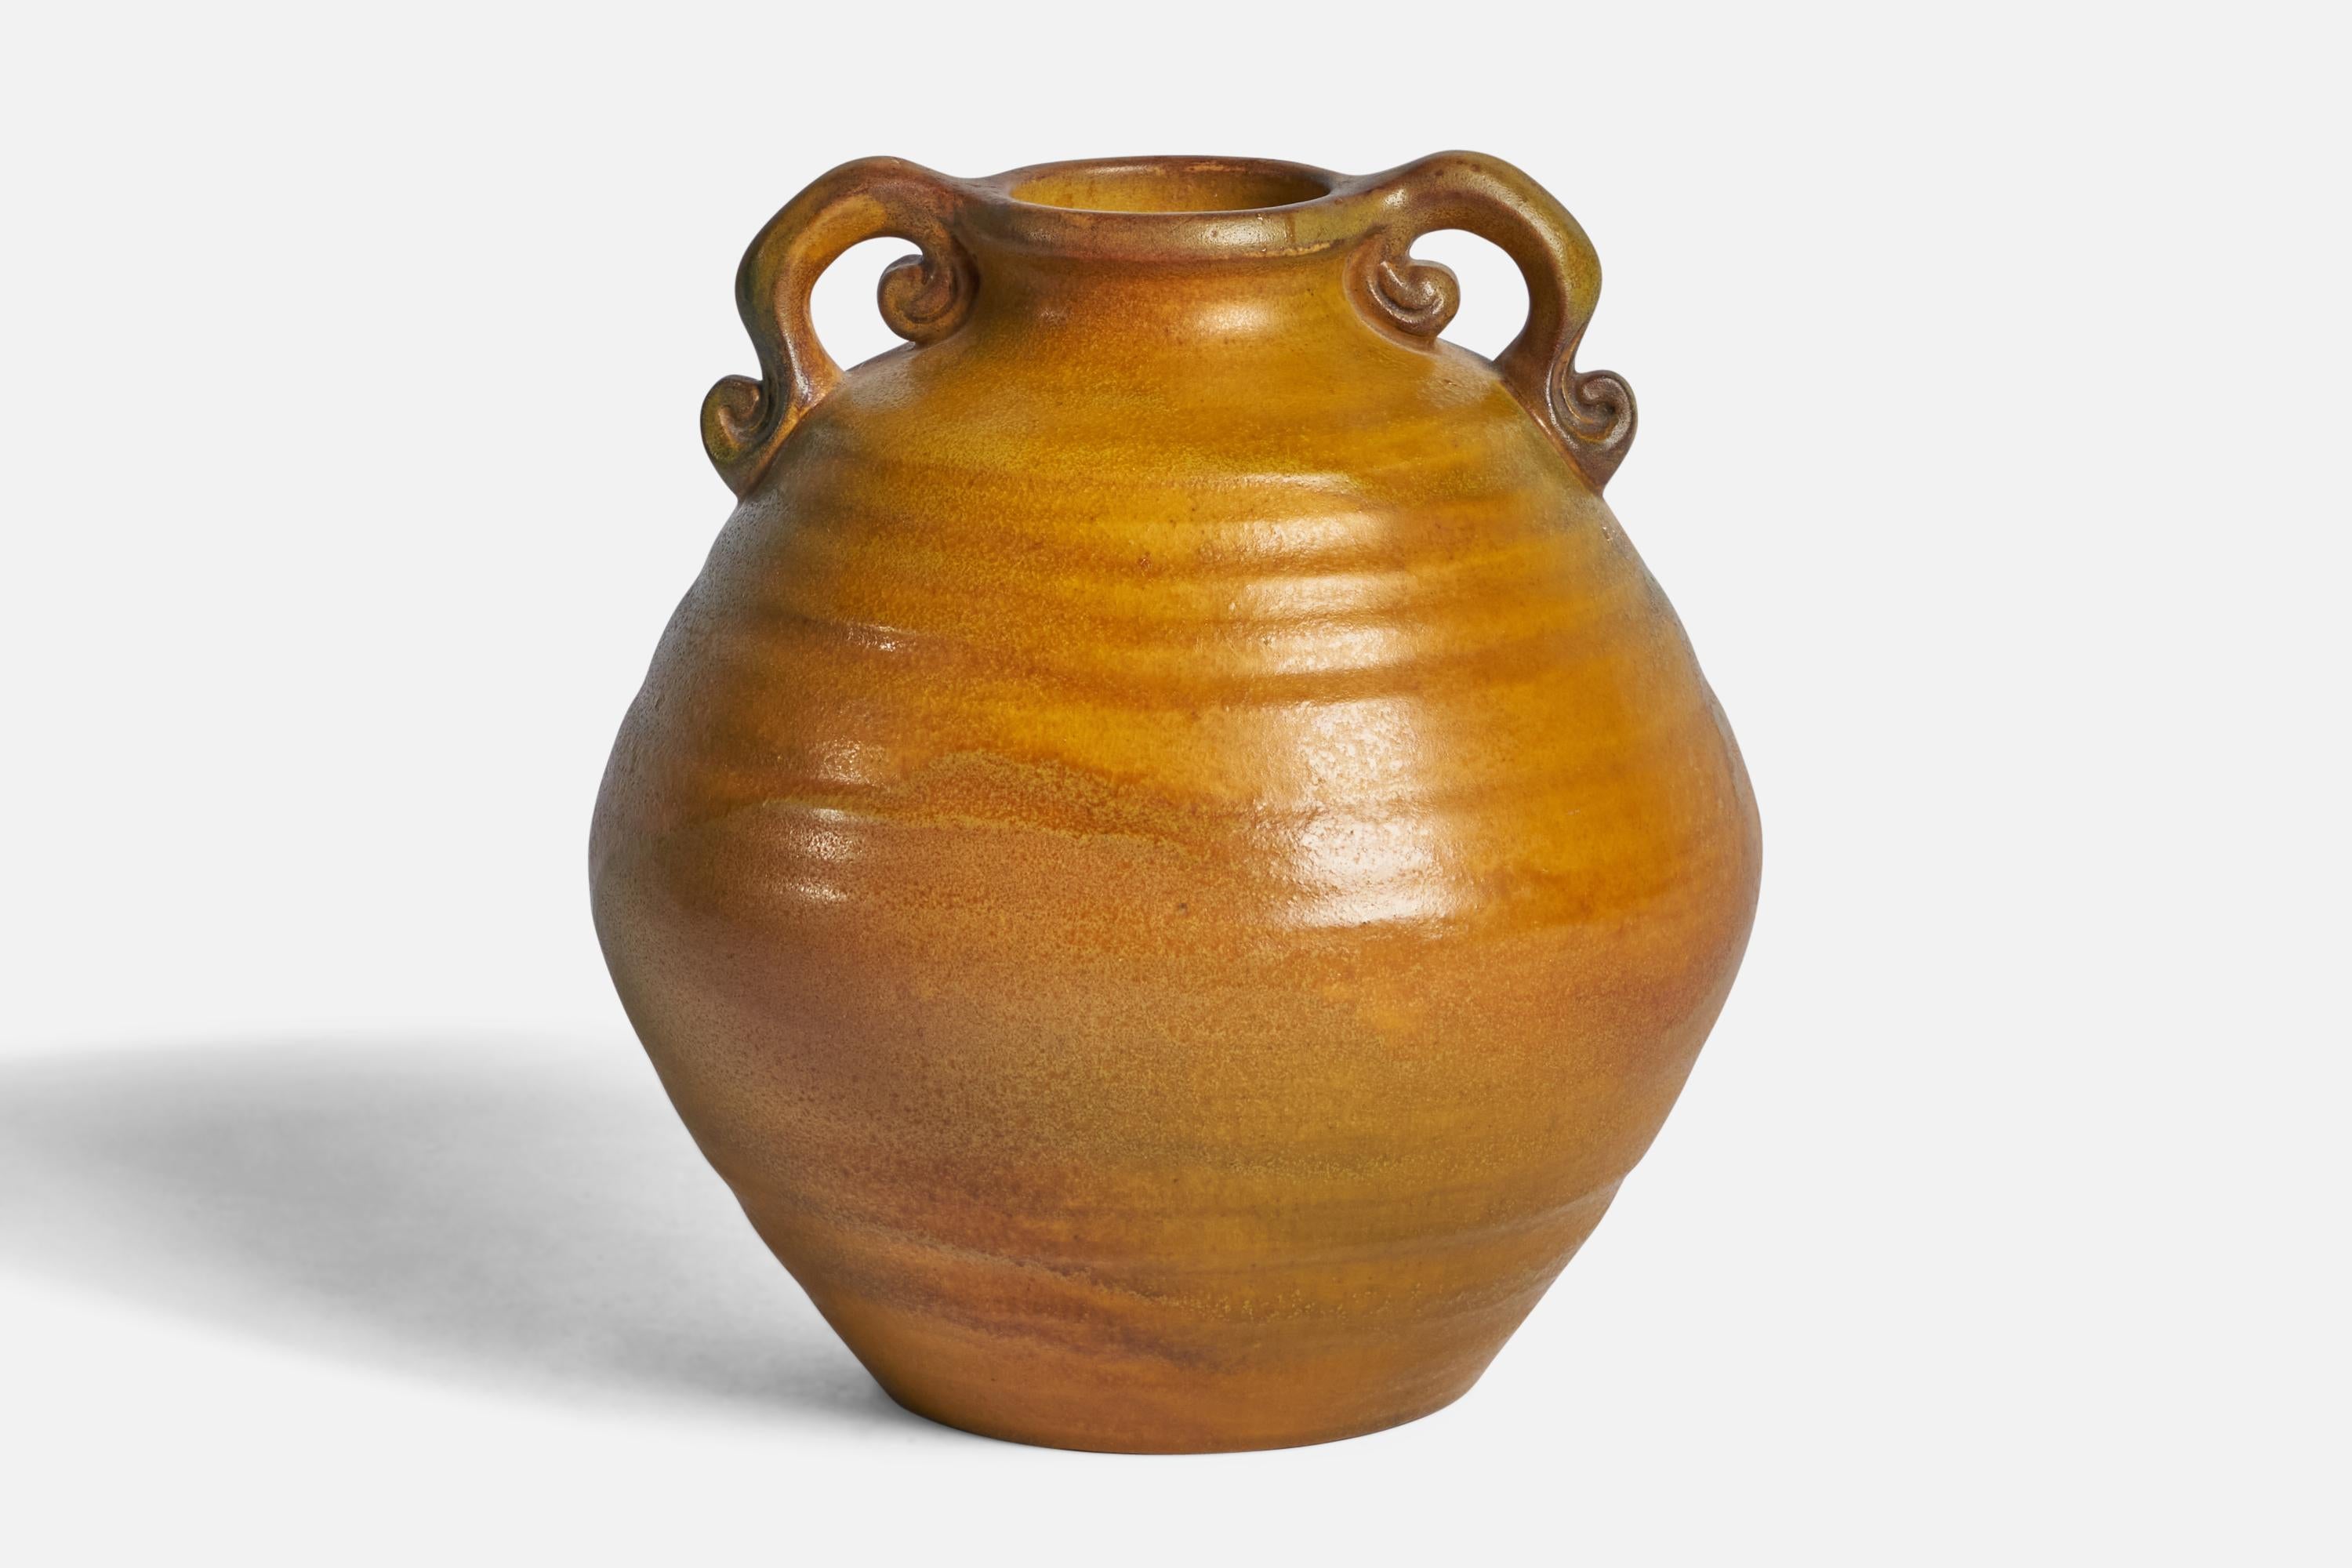 An orange yellow glazed stoneware vase designed and produced by Peter Ipsens Enke, Denmark, 1940s.